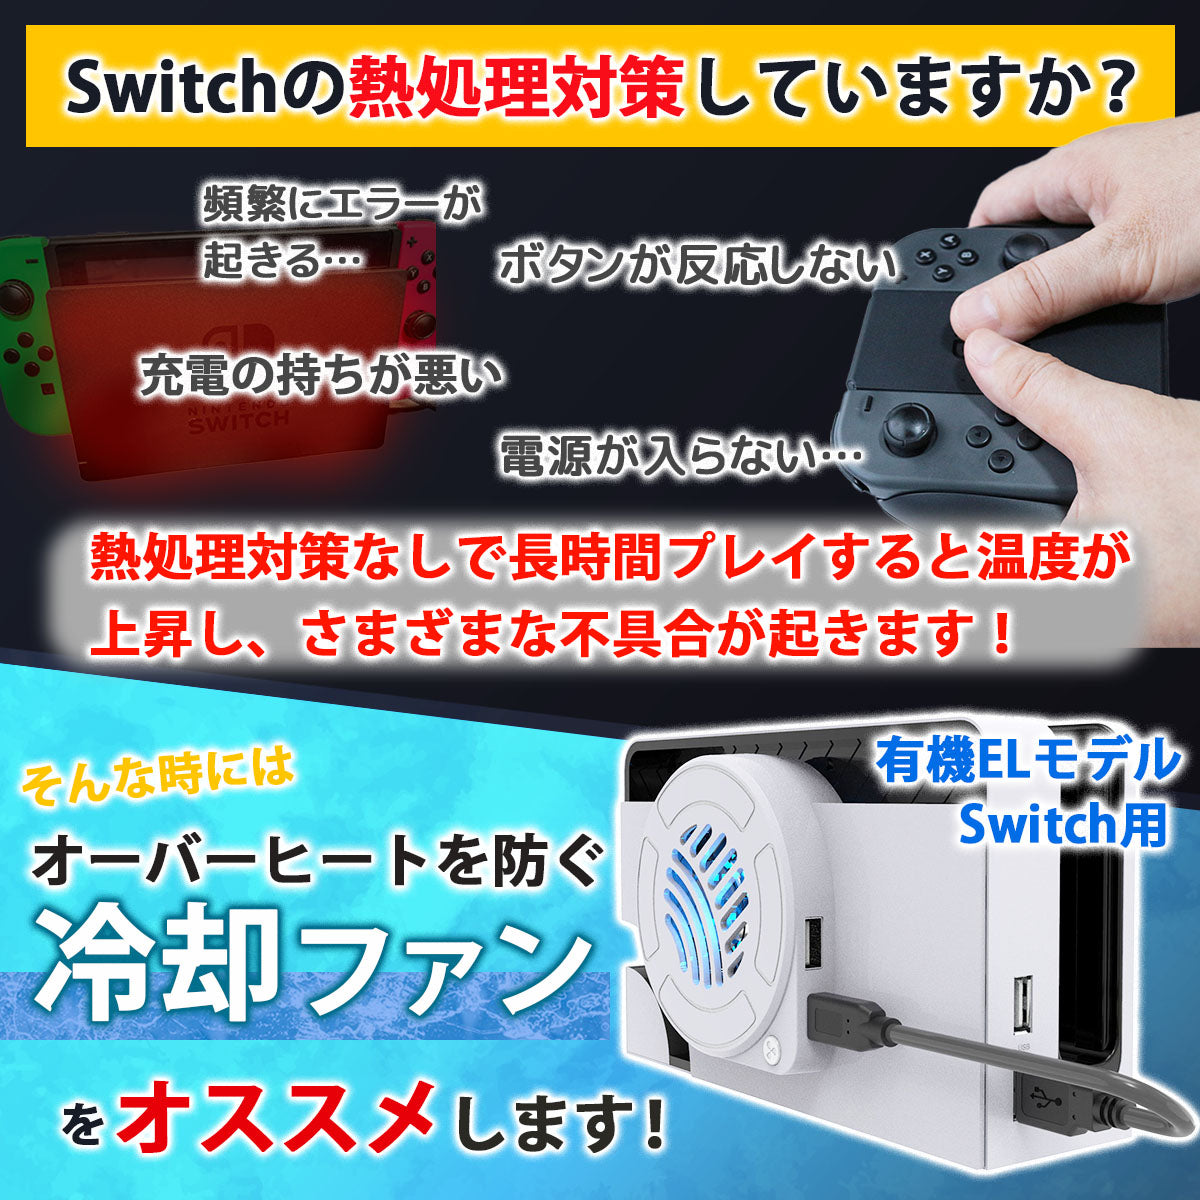 Nintendo  NintendoSwitch  OLED  Switch  ゲーム  ゲーム周辺機器  スイッチ  ハイパワー  ファン  任天堂  冷却ファン  吸熱  専用  排熱  有機ELディスプレイ  軽量  長時間プレイ